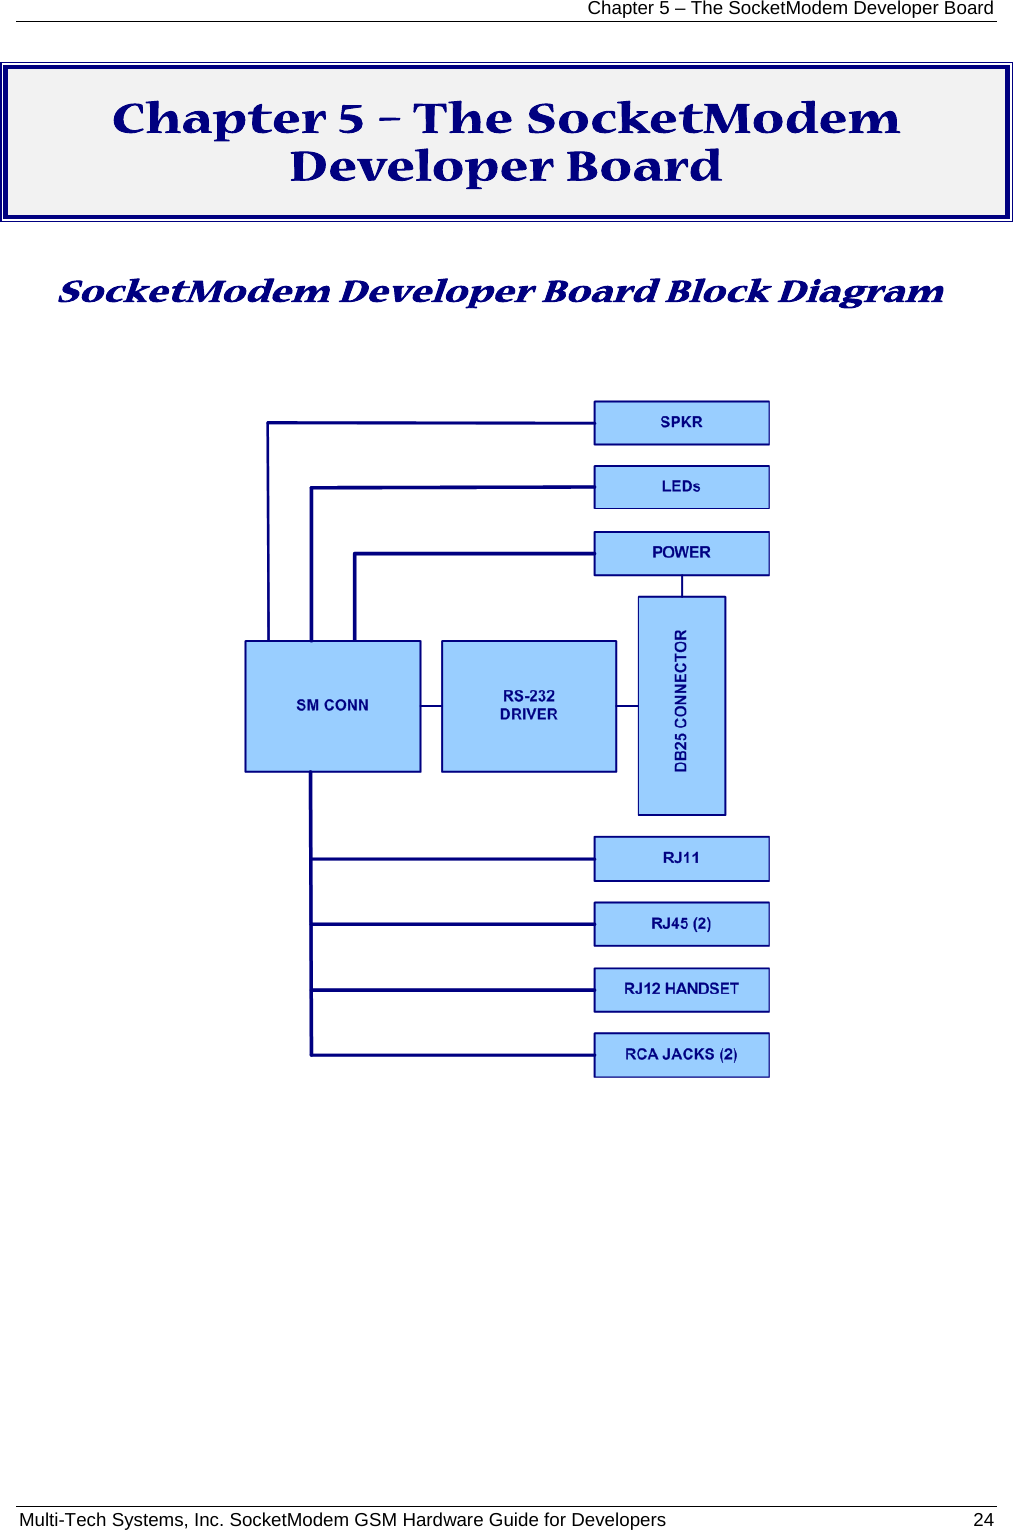 Chapter 5 – The SocketModem Developer Board Multi-Tech Systems, Inc. SocketModem GSM Hardware Guide for Developers   24  Chapter 5 – The SocketModem Developer Board  SocketModem Developer Board Block Diagram       